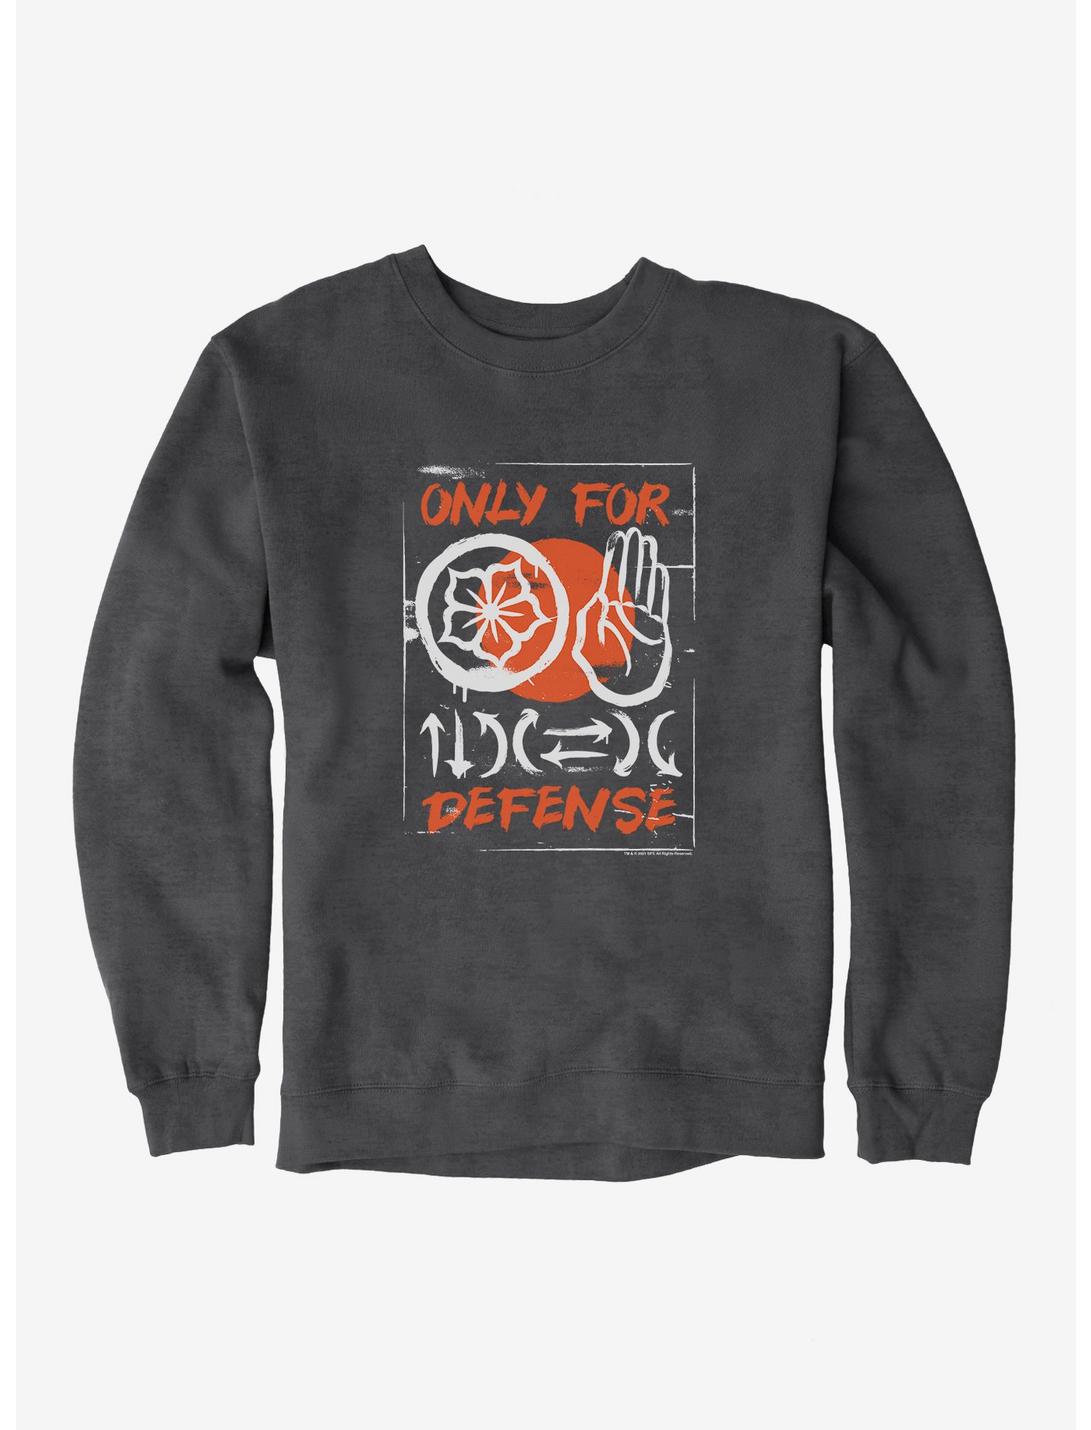 COBRA KAI S4 Defense Only Sweatshirt, , hi-res